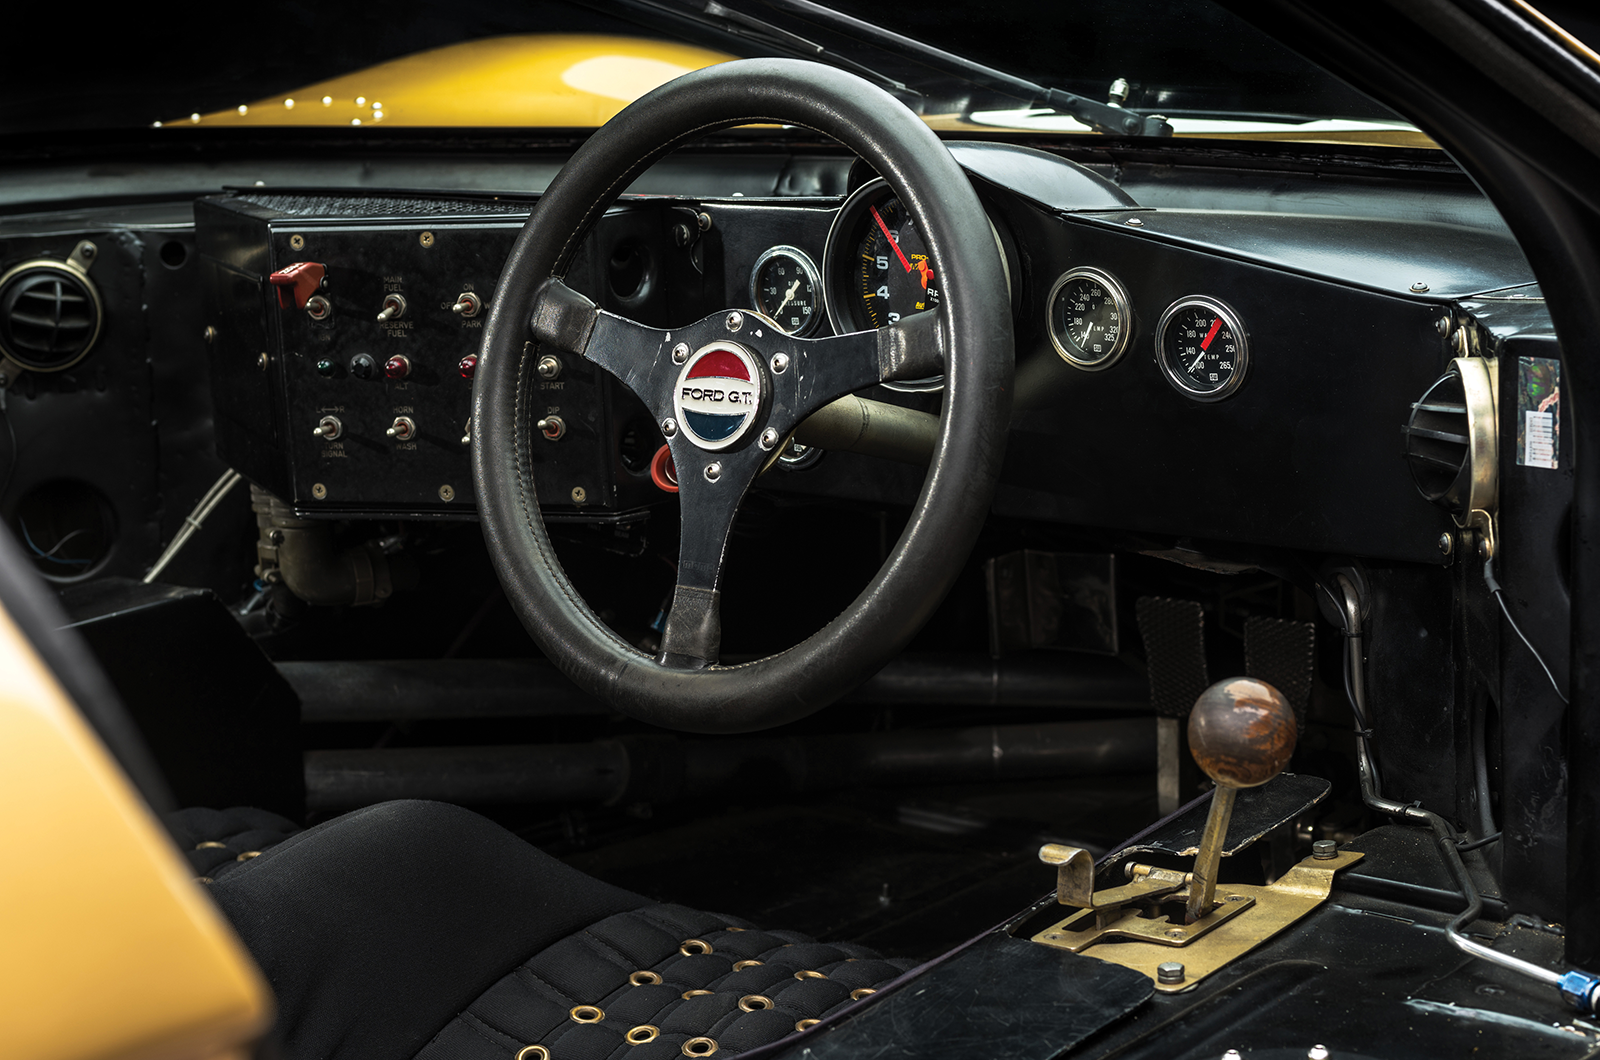 Le Mans star GT40 could make £9m at auction